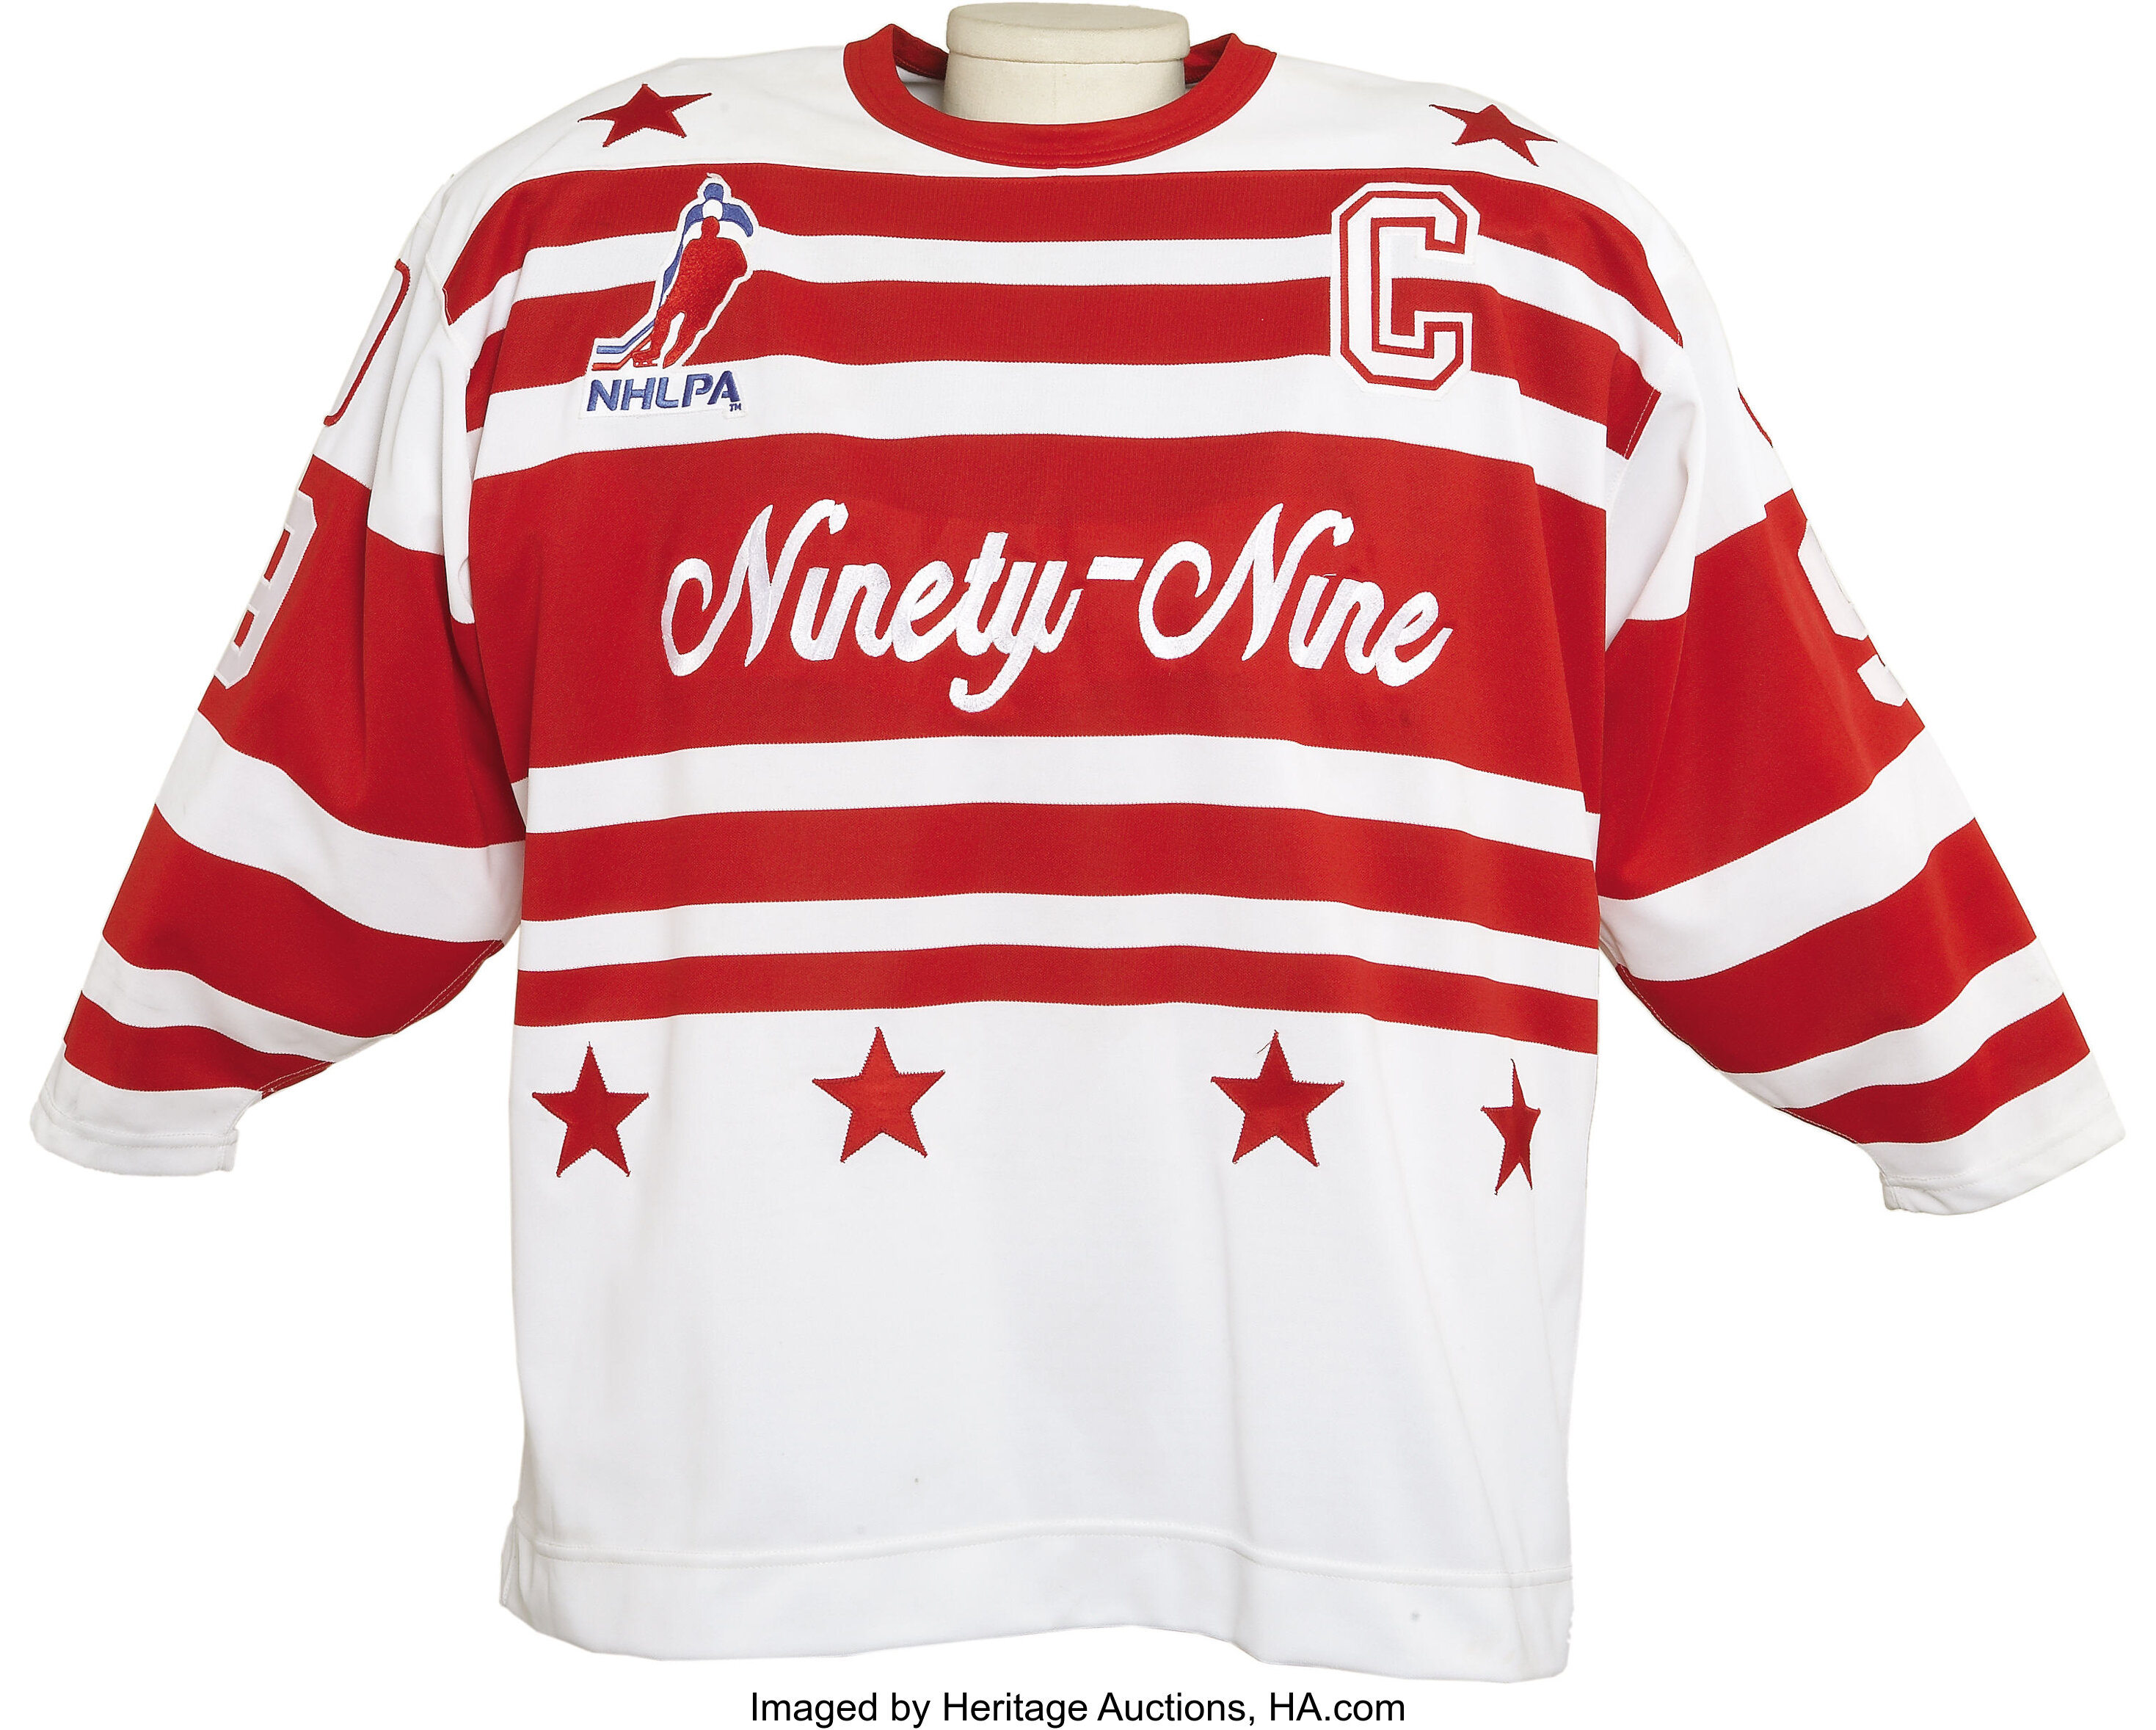 Gretzky-era adizero heritage jersey unveiled at SOTF; to be worn